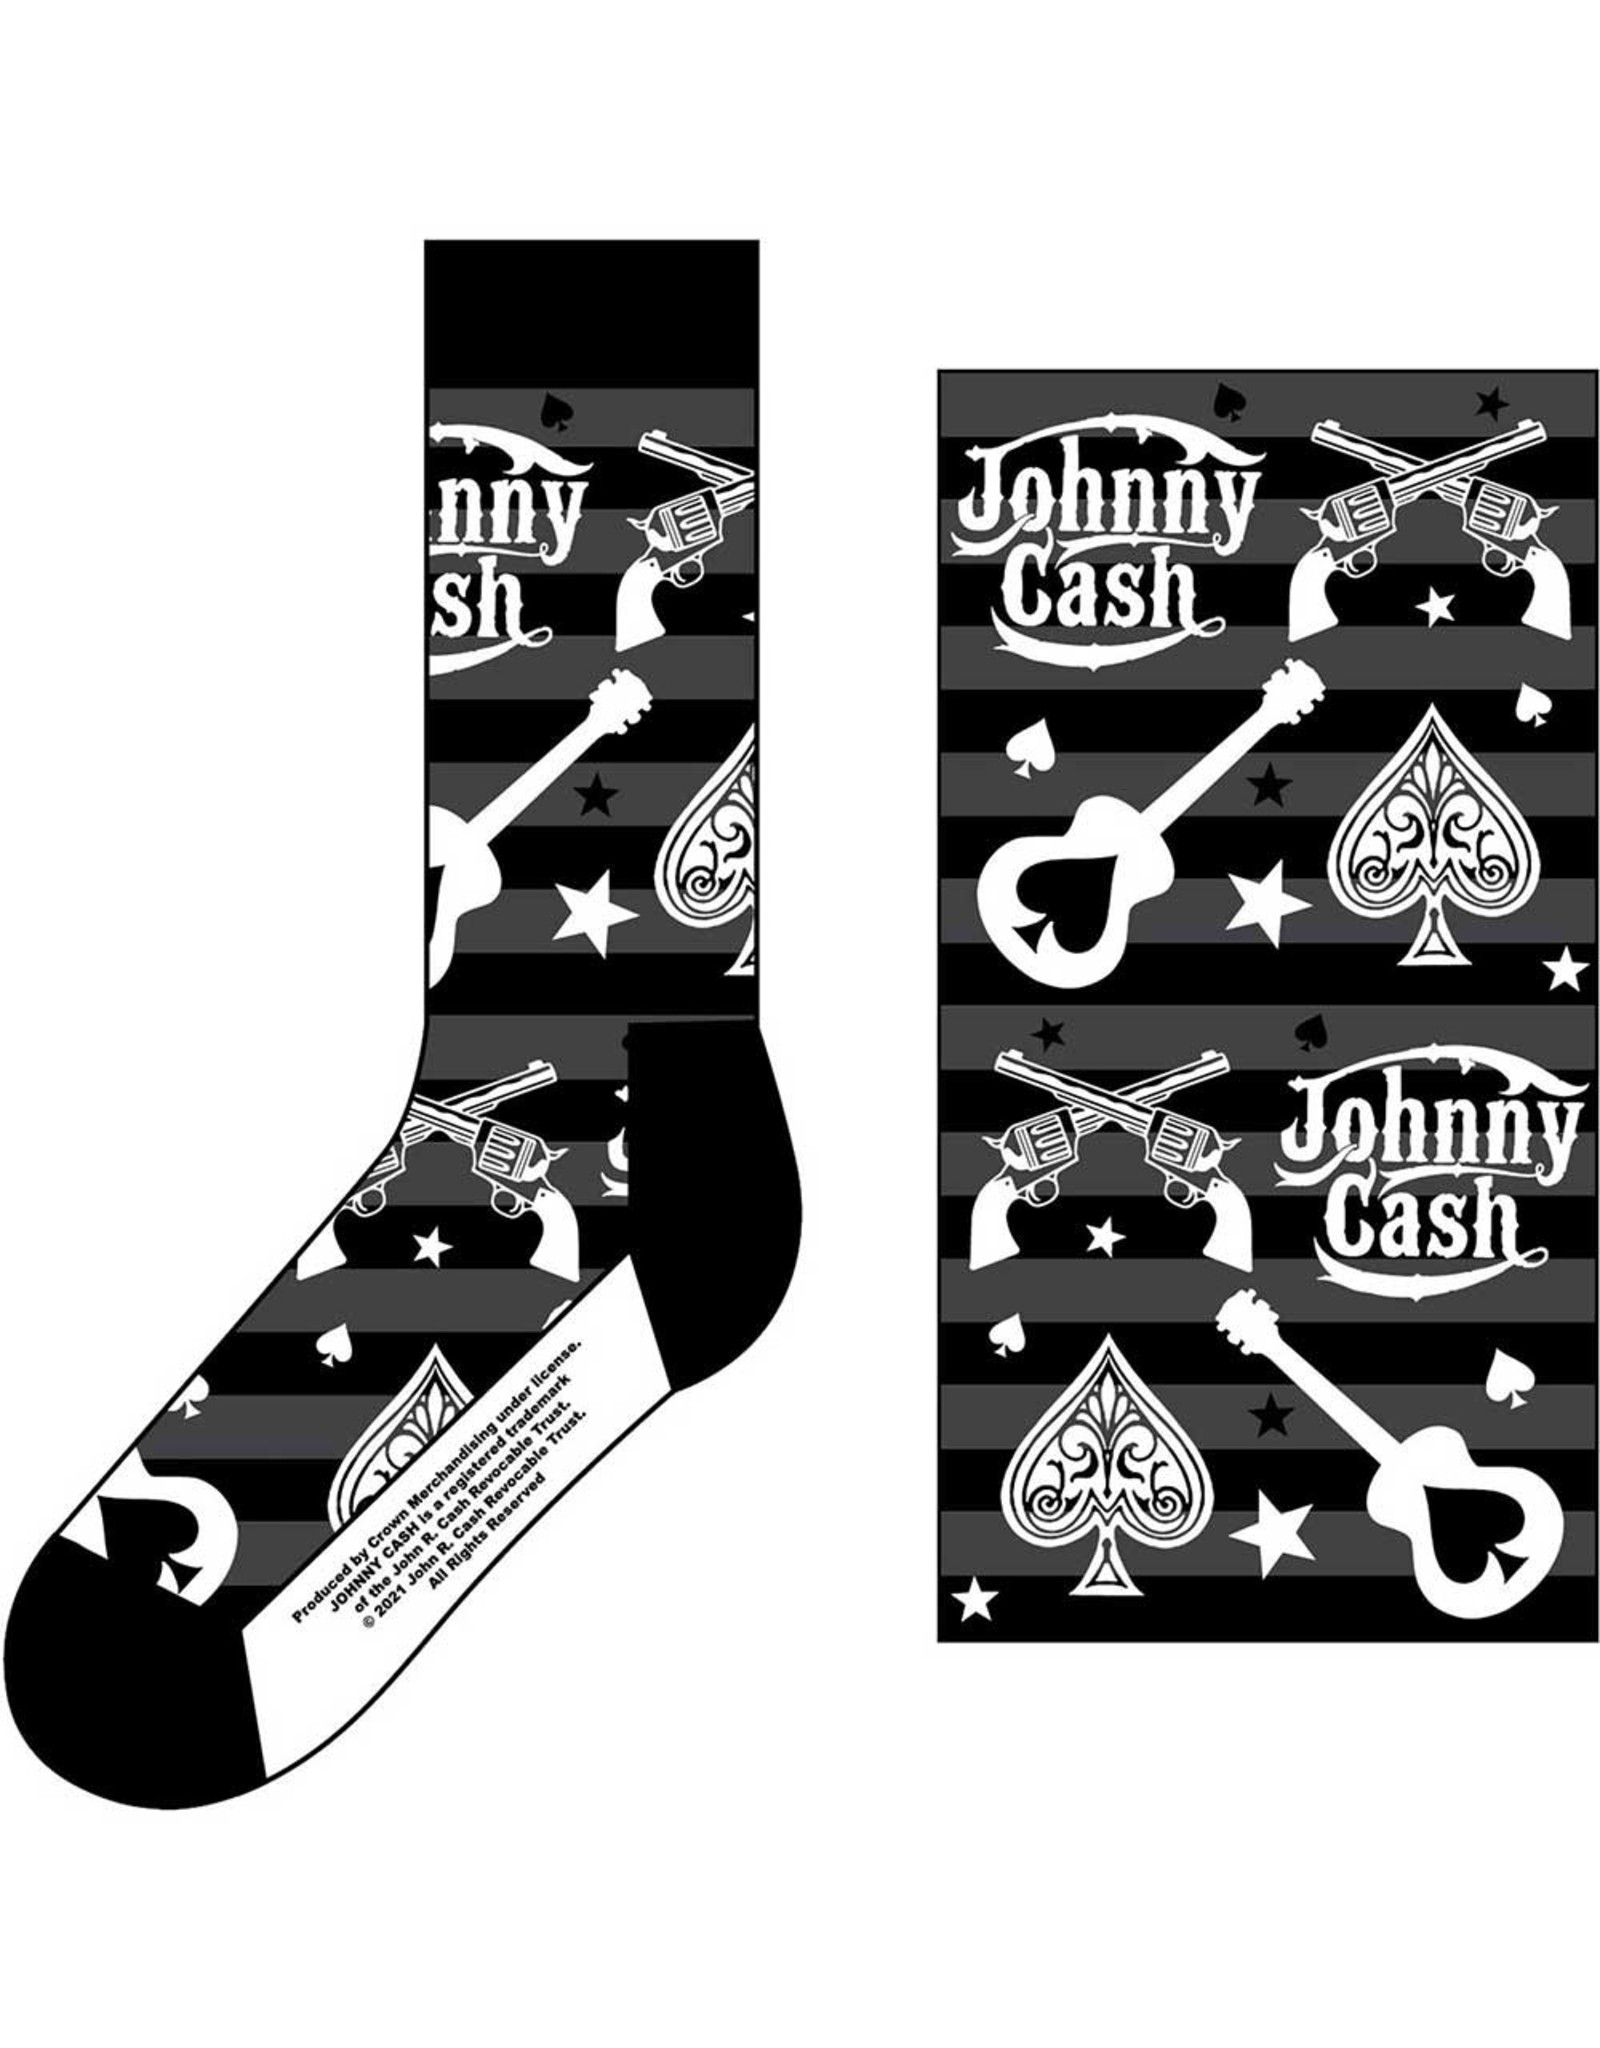 Johnny Cash / Classic Logo Socks